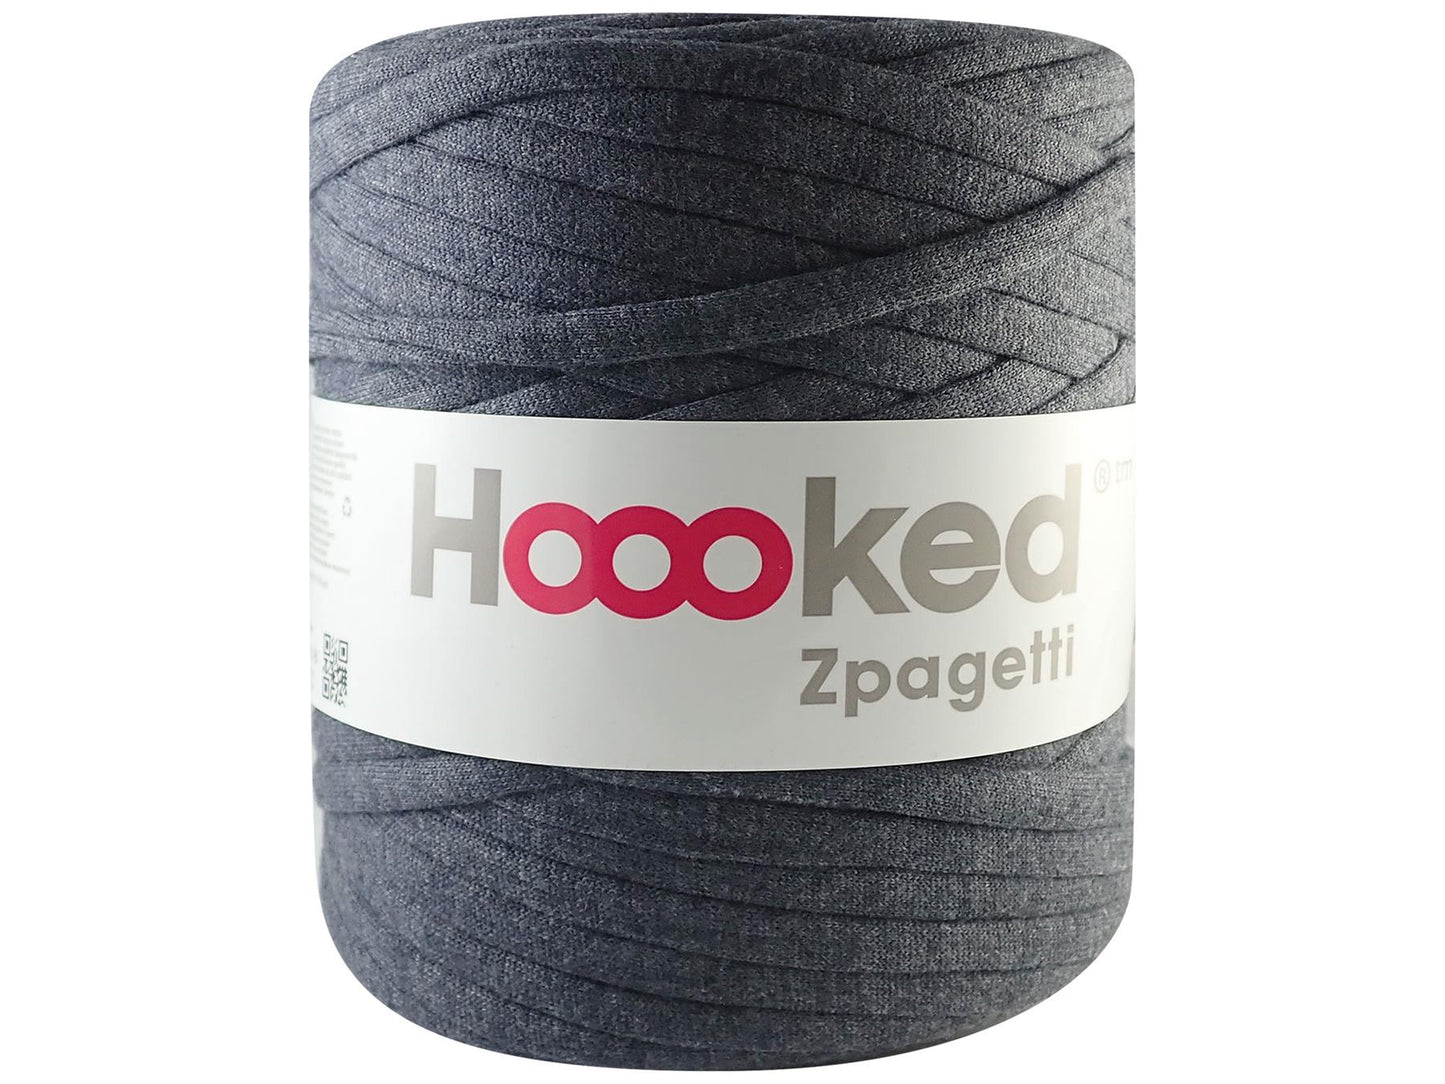 Hoooked Zpagetti Slate Blue Cotton T-Shirt Yarn - 120M 700g